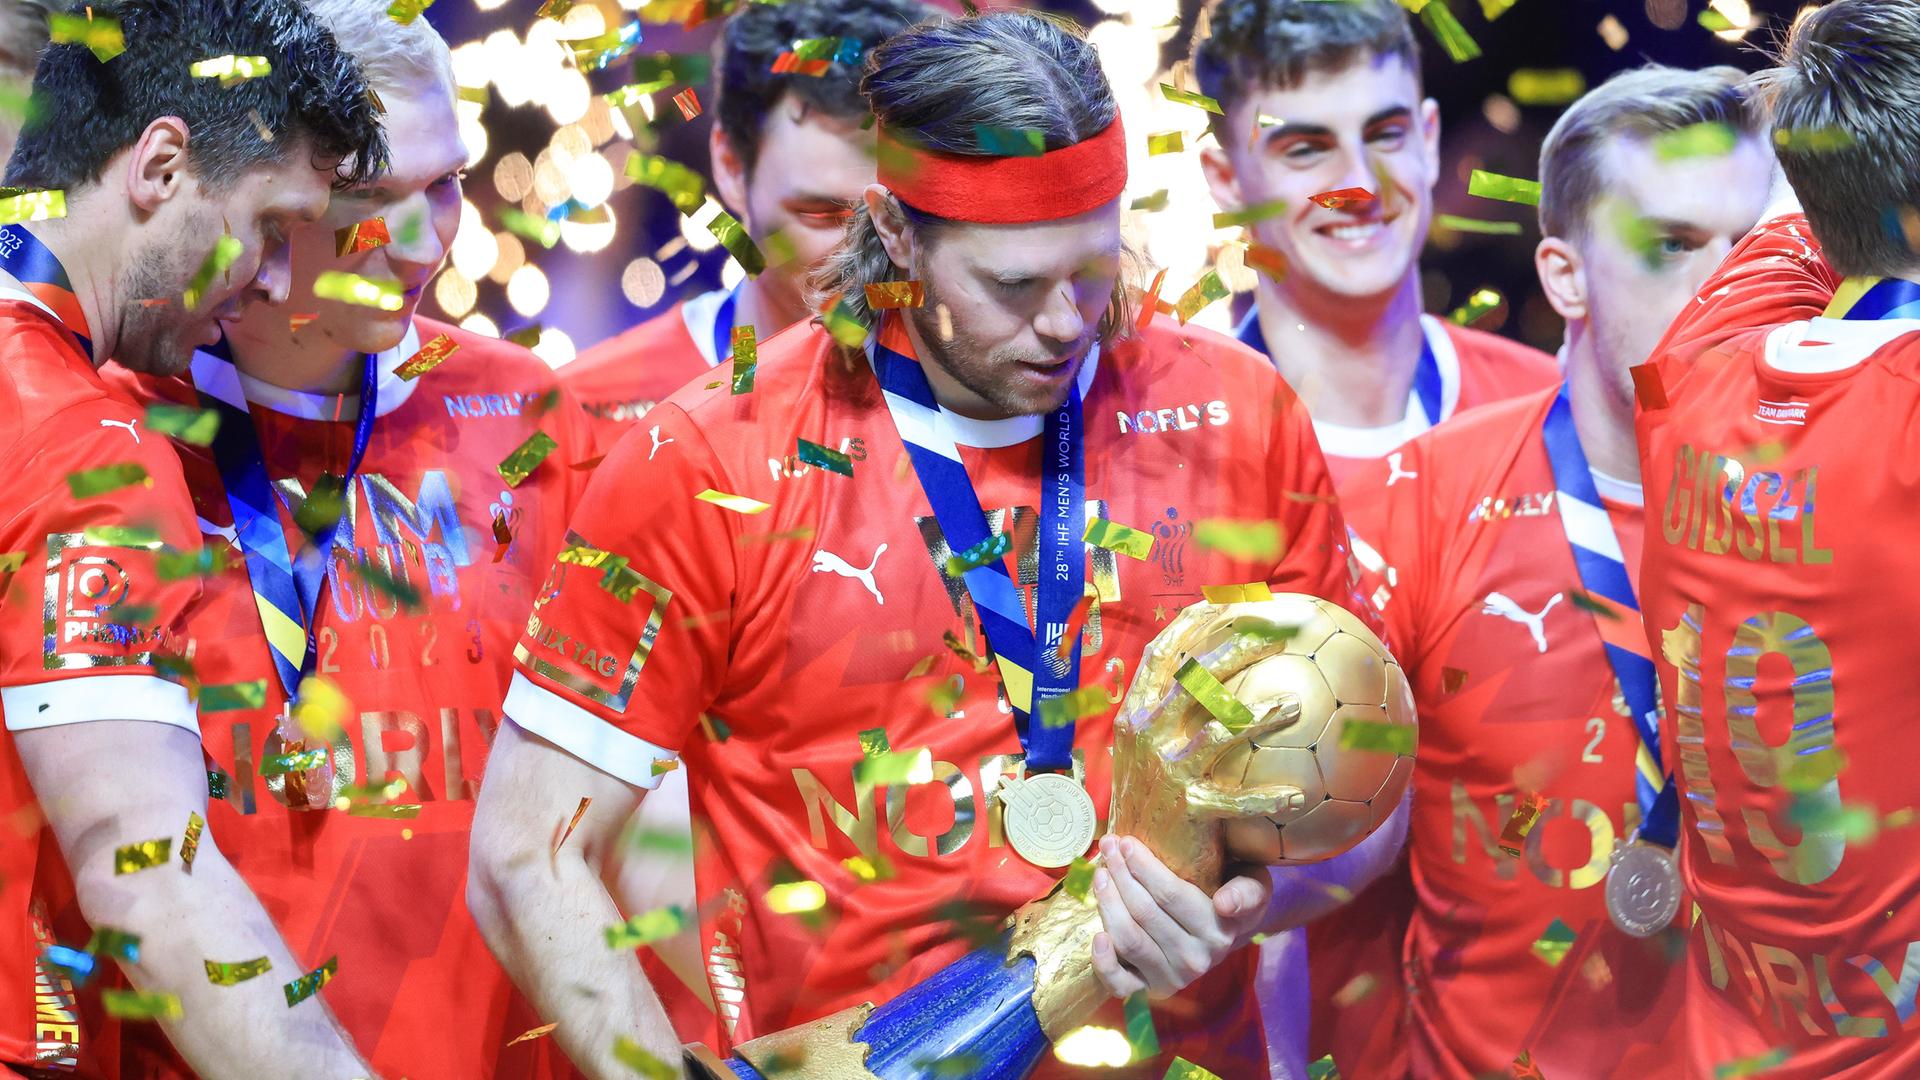 Dänemarks Handball-Spieler Mikkel Hansen betrachtet im Konfetti-Regen den Weltmeister-Pokal.